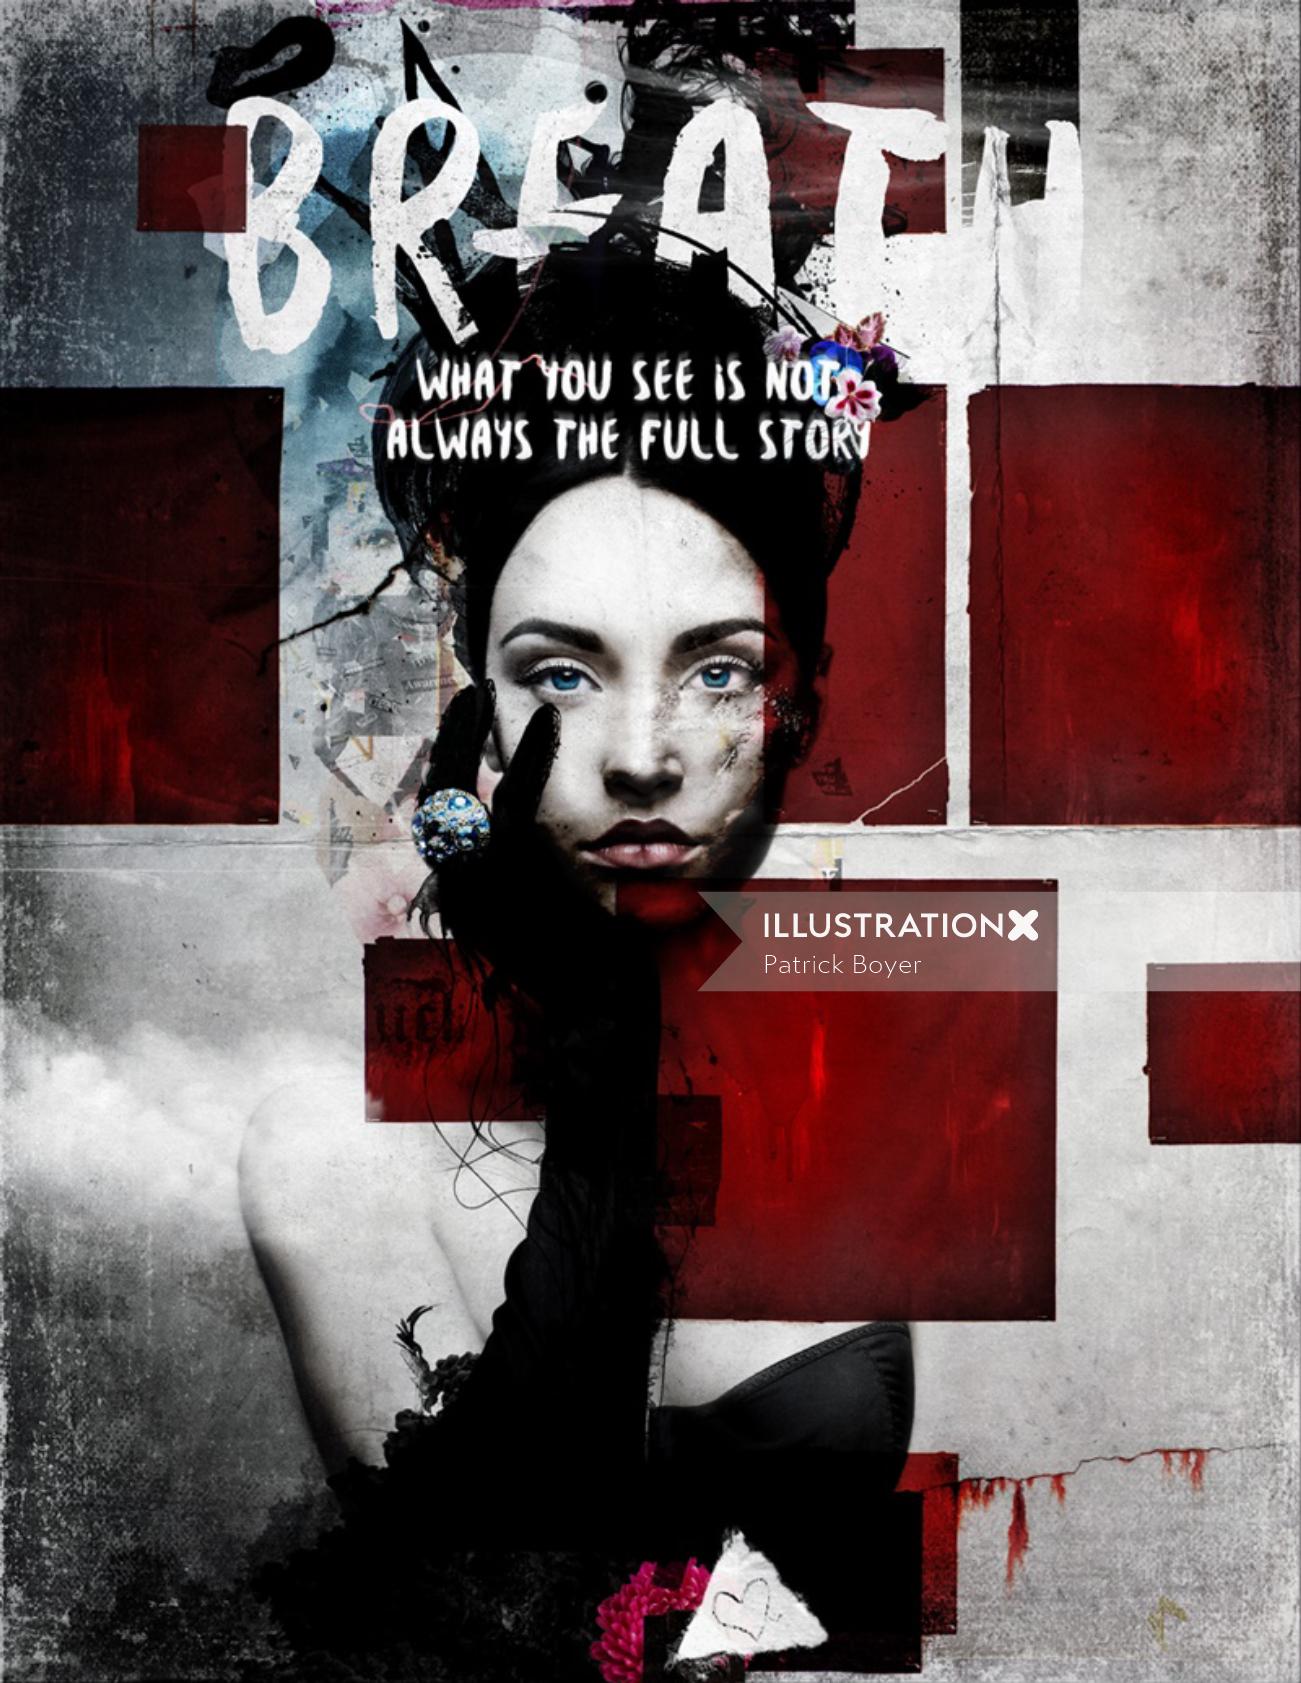 Breath bloody poster art by Patrick Boyer